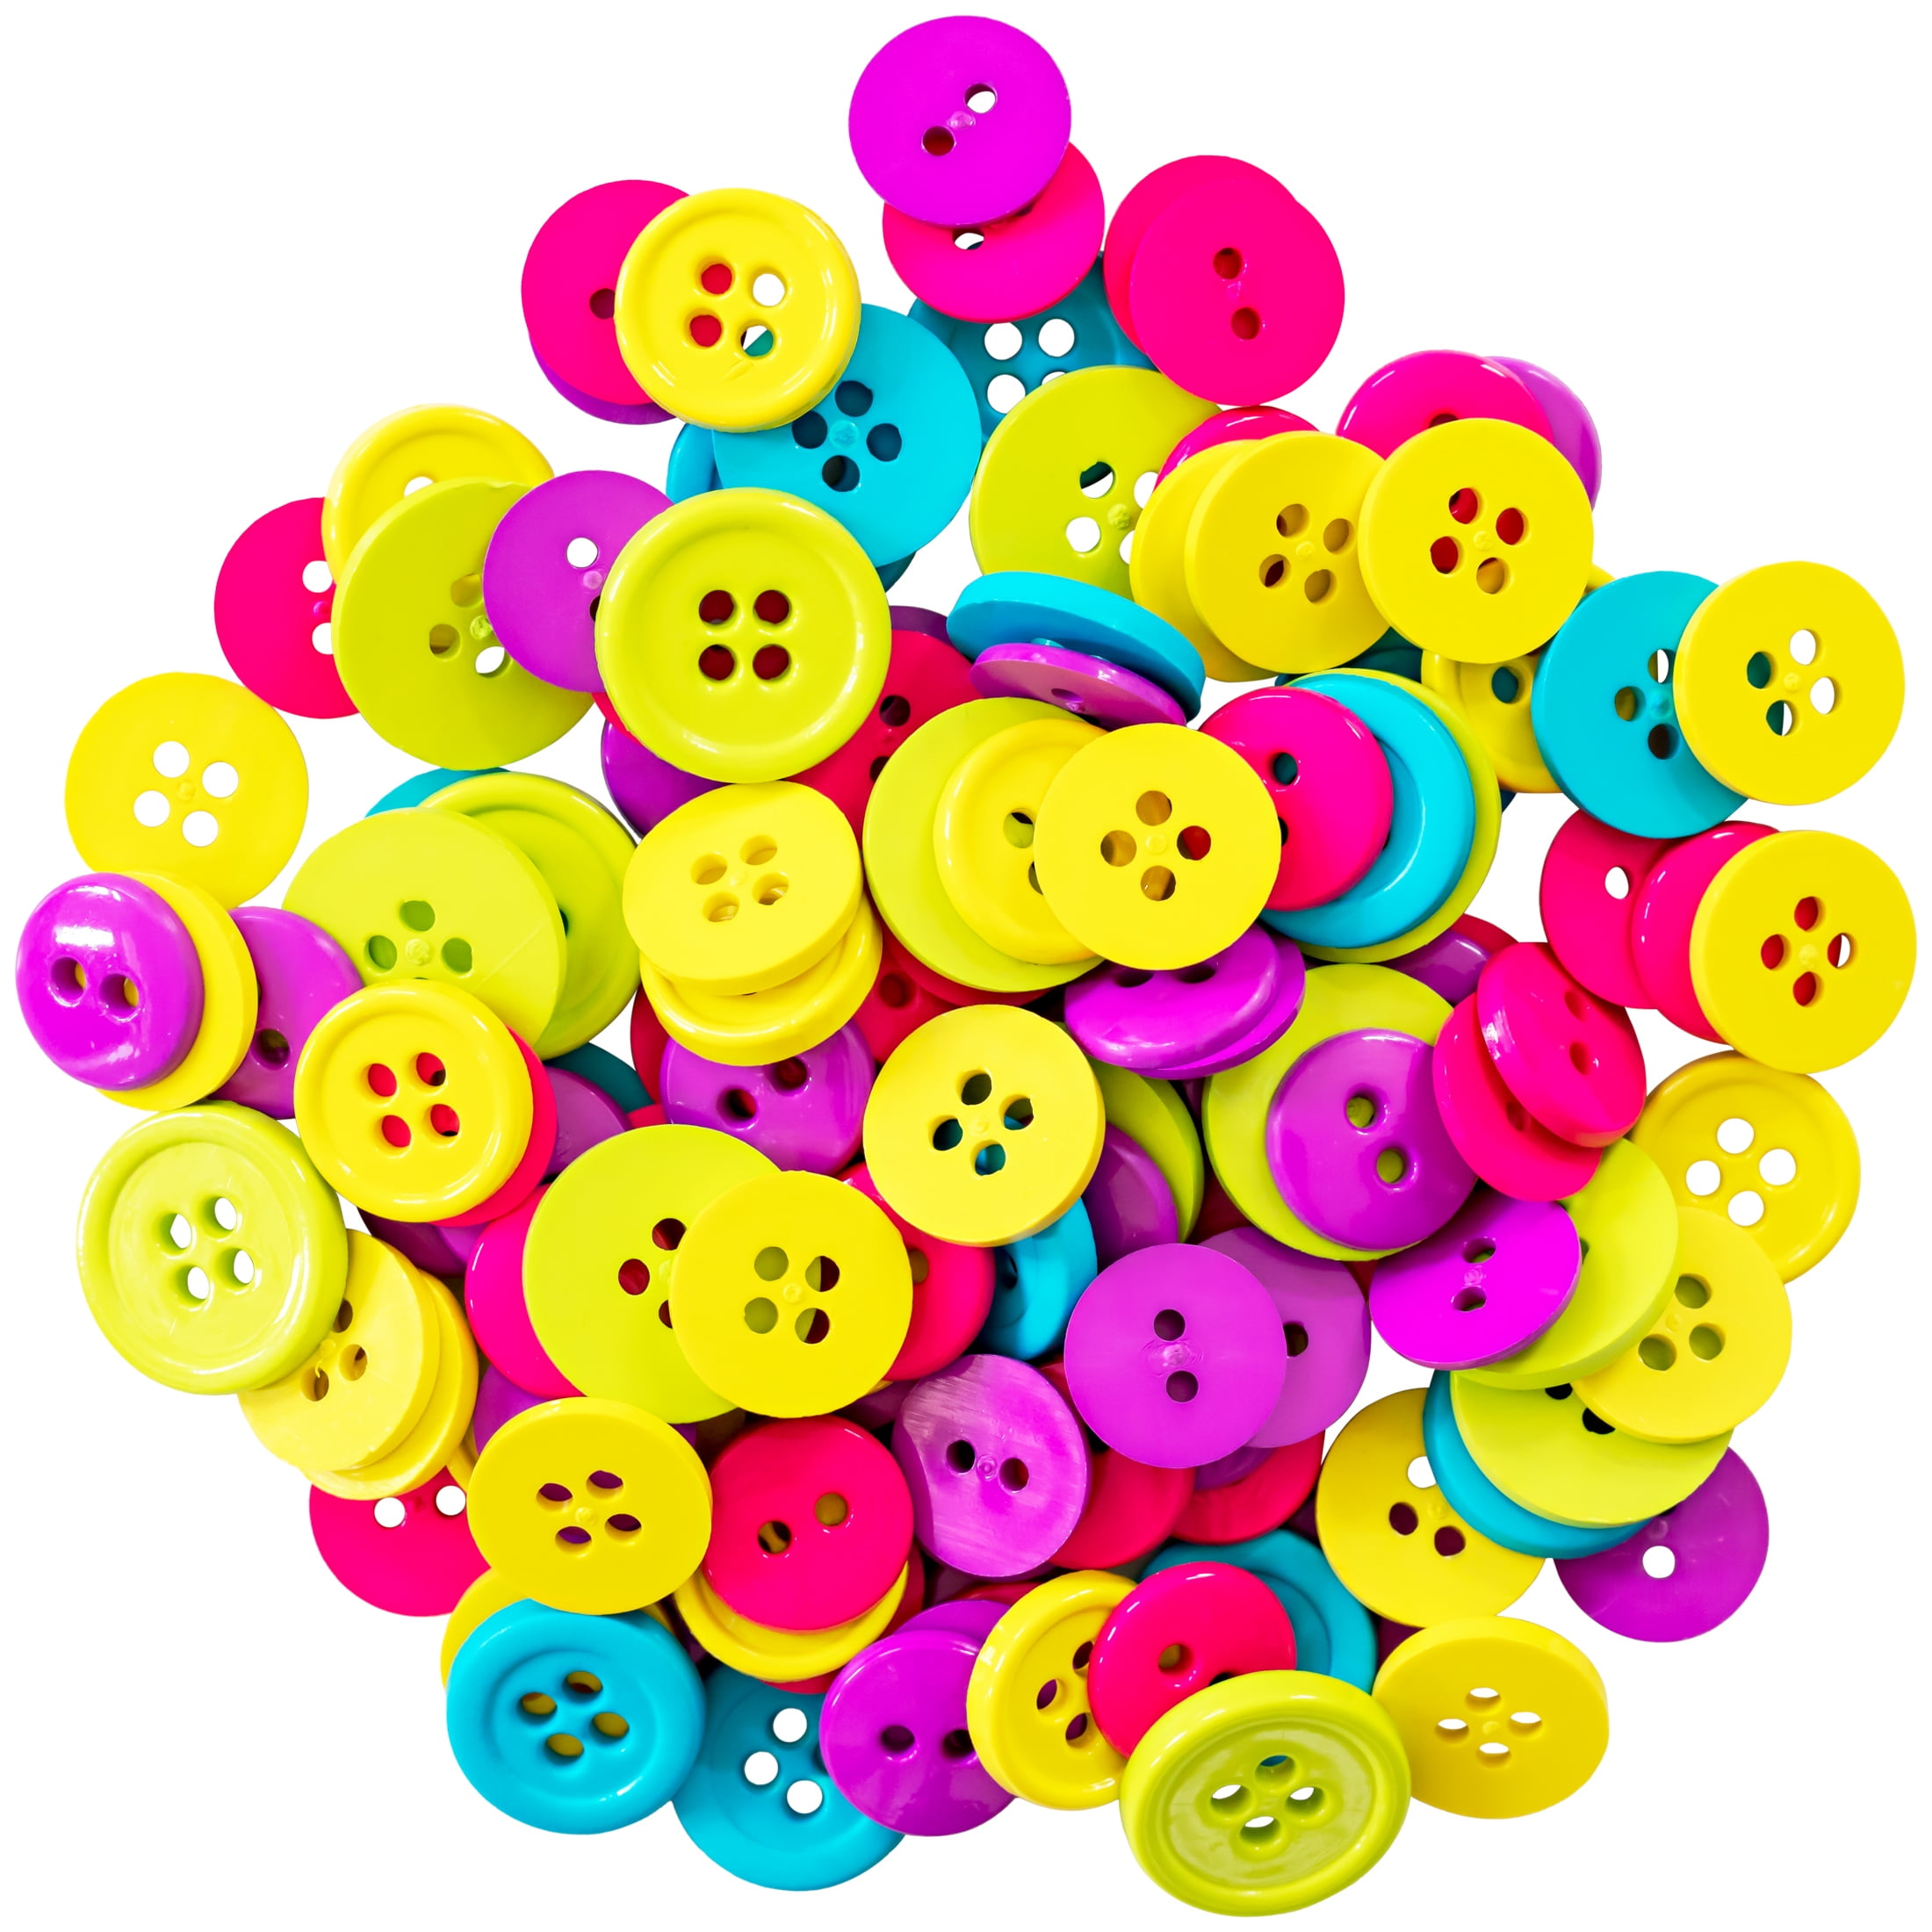 Favorite Findings Buttons - 498 Big Pastel 6pcs - 0075160732337